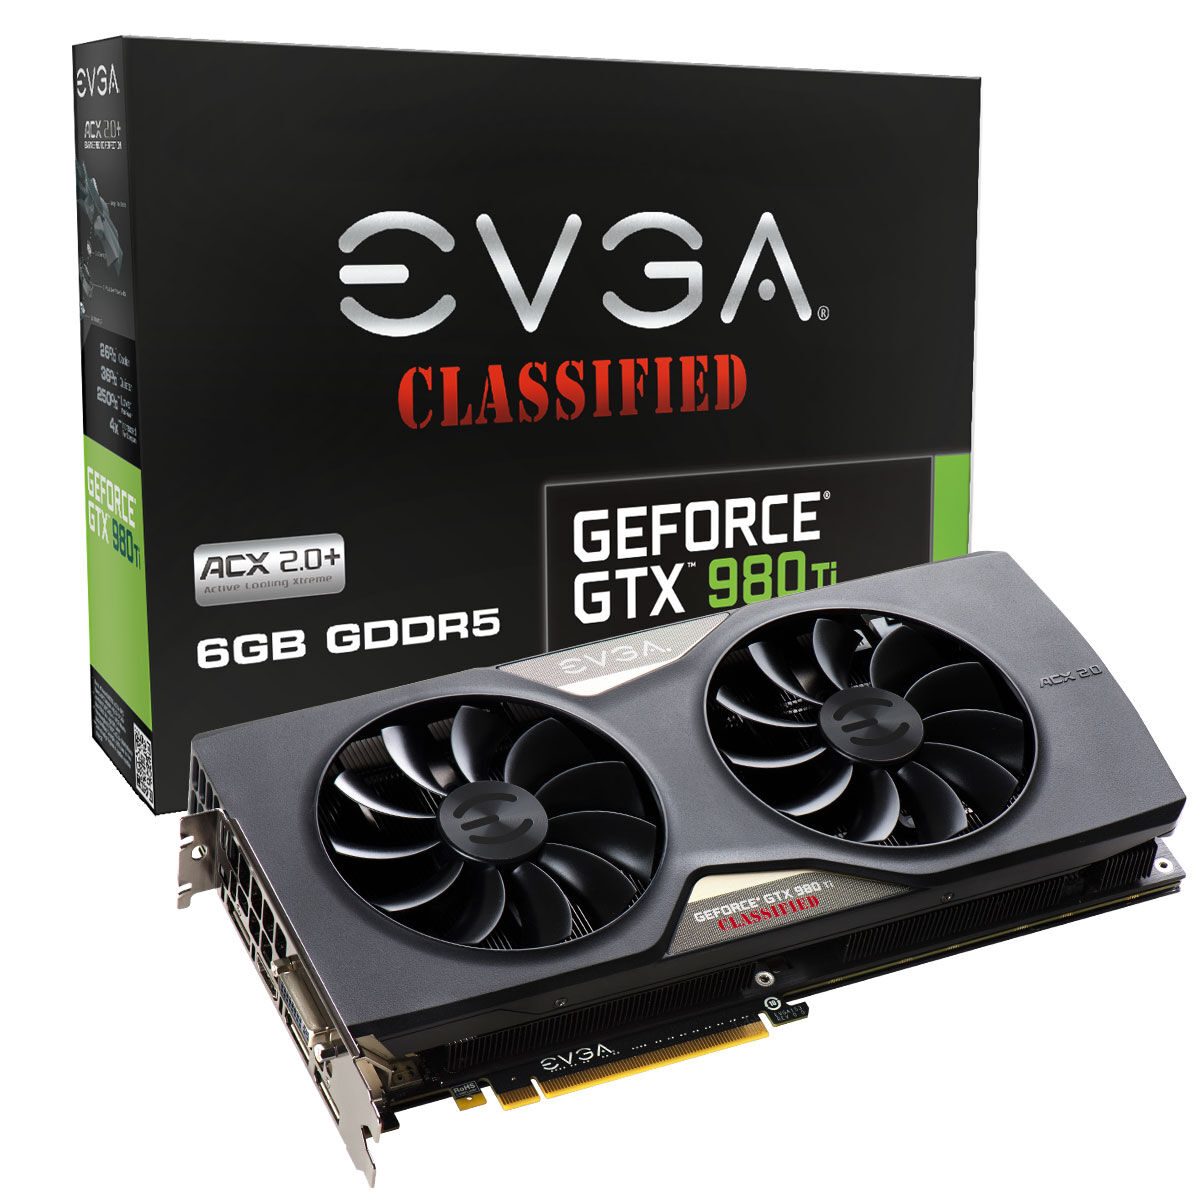 EVGA GeForce GTX 980 Ti Classified ACX 2.0+ announced 30